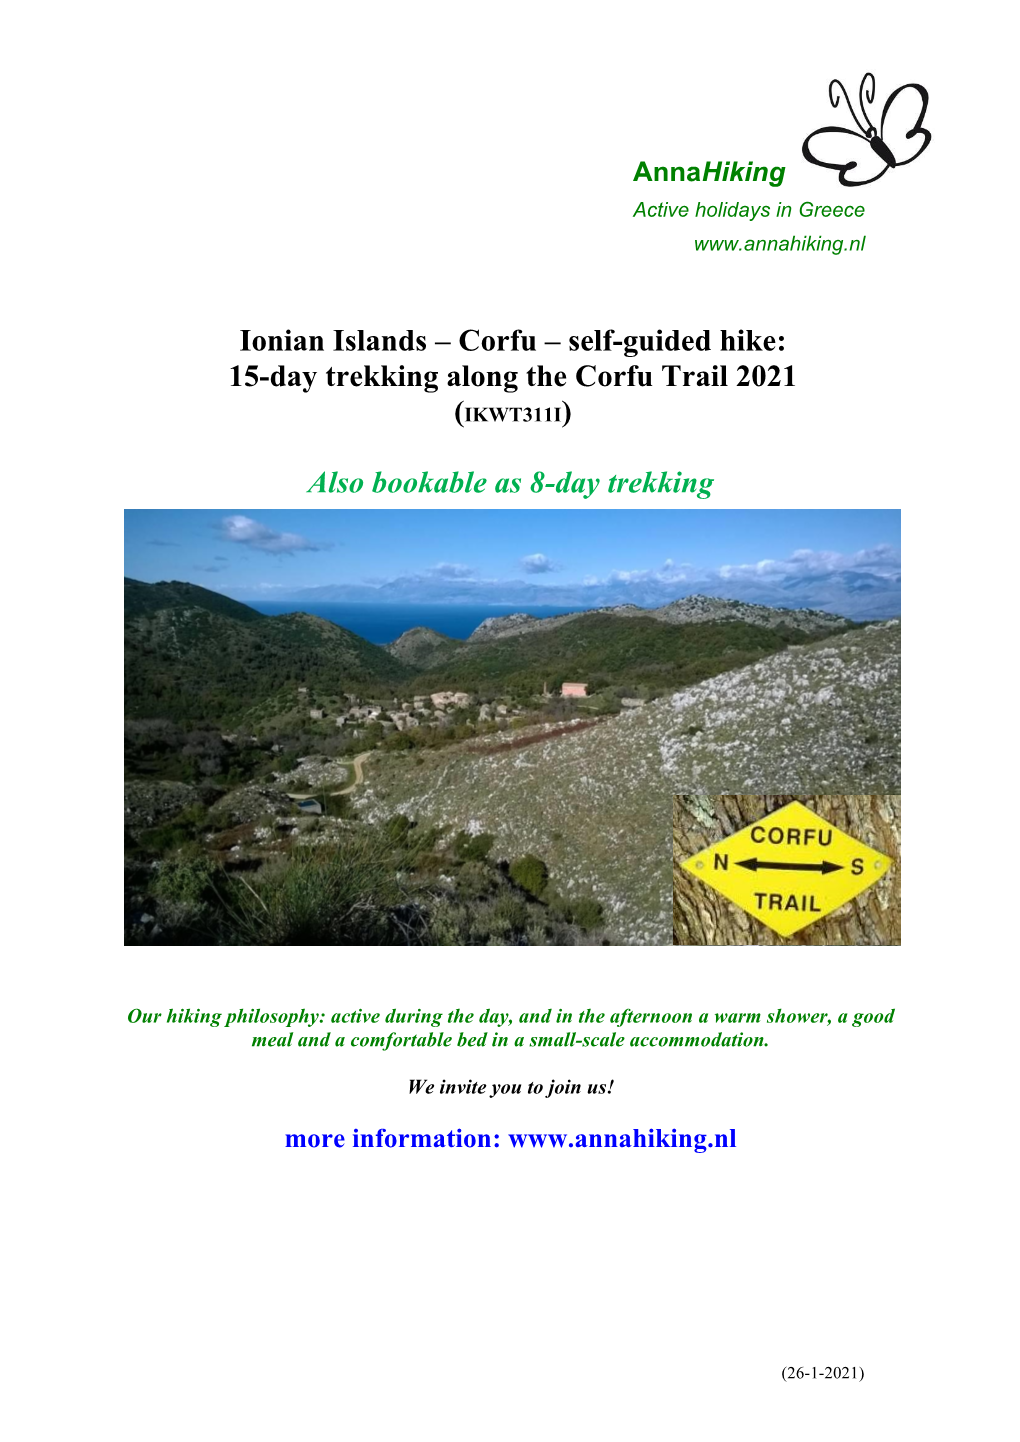 15-Day Trekking Along the Corfu Trail 2021 (IKWT311I)